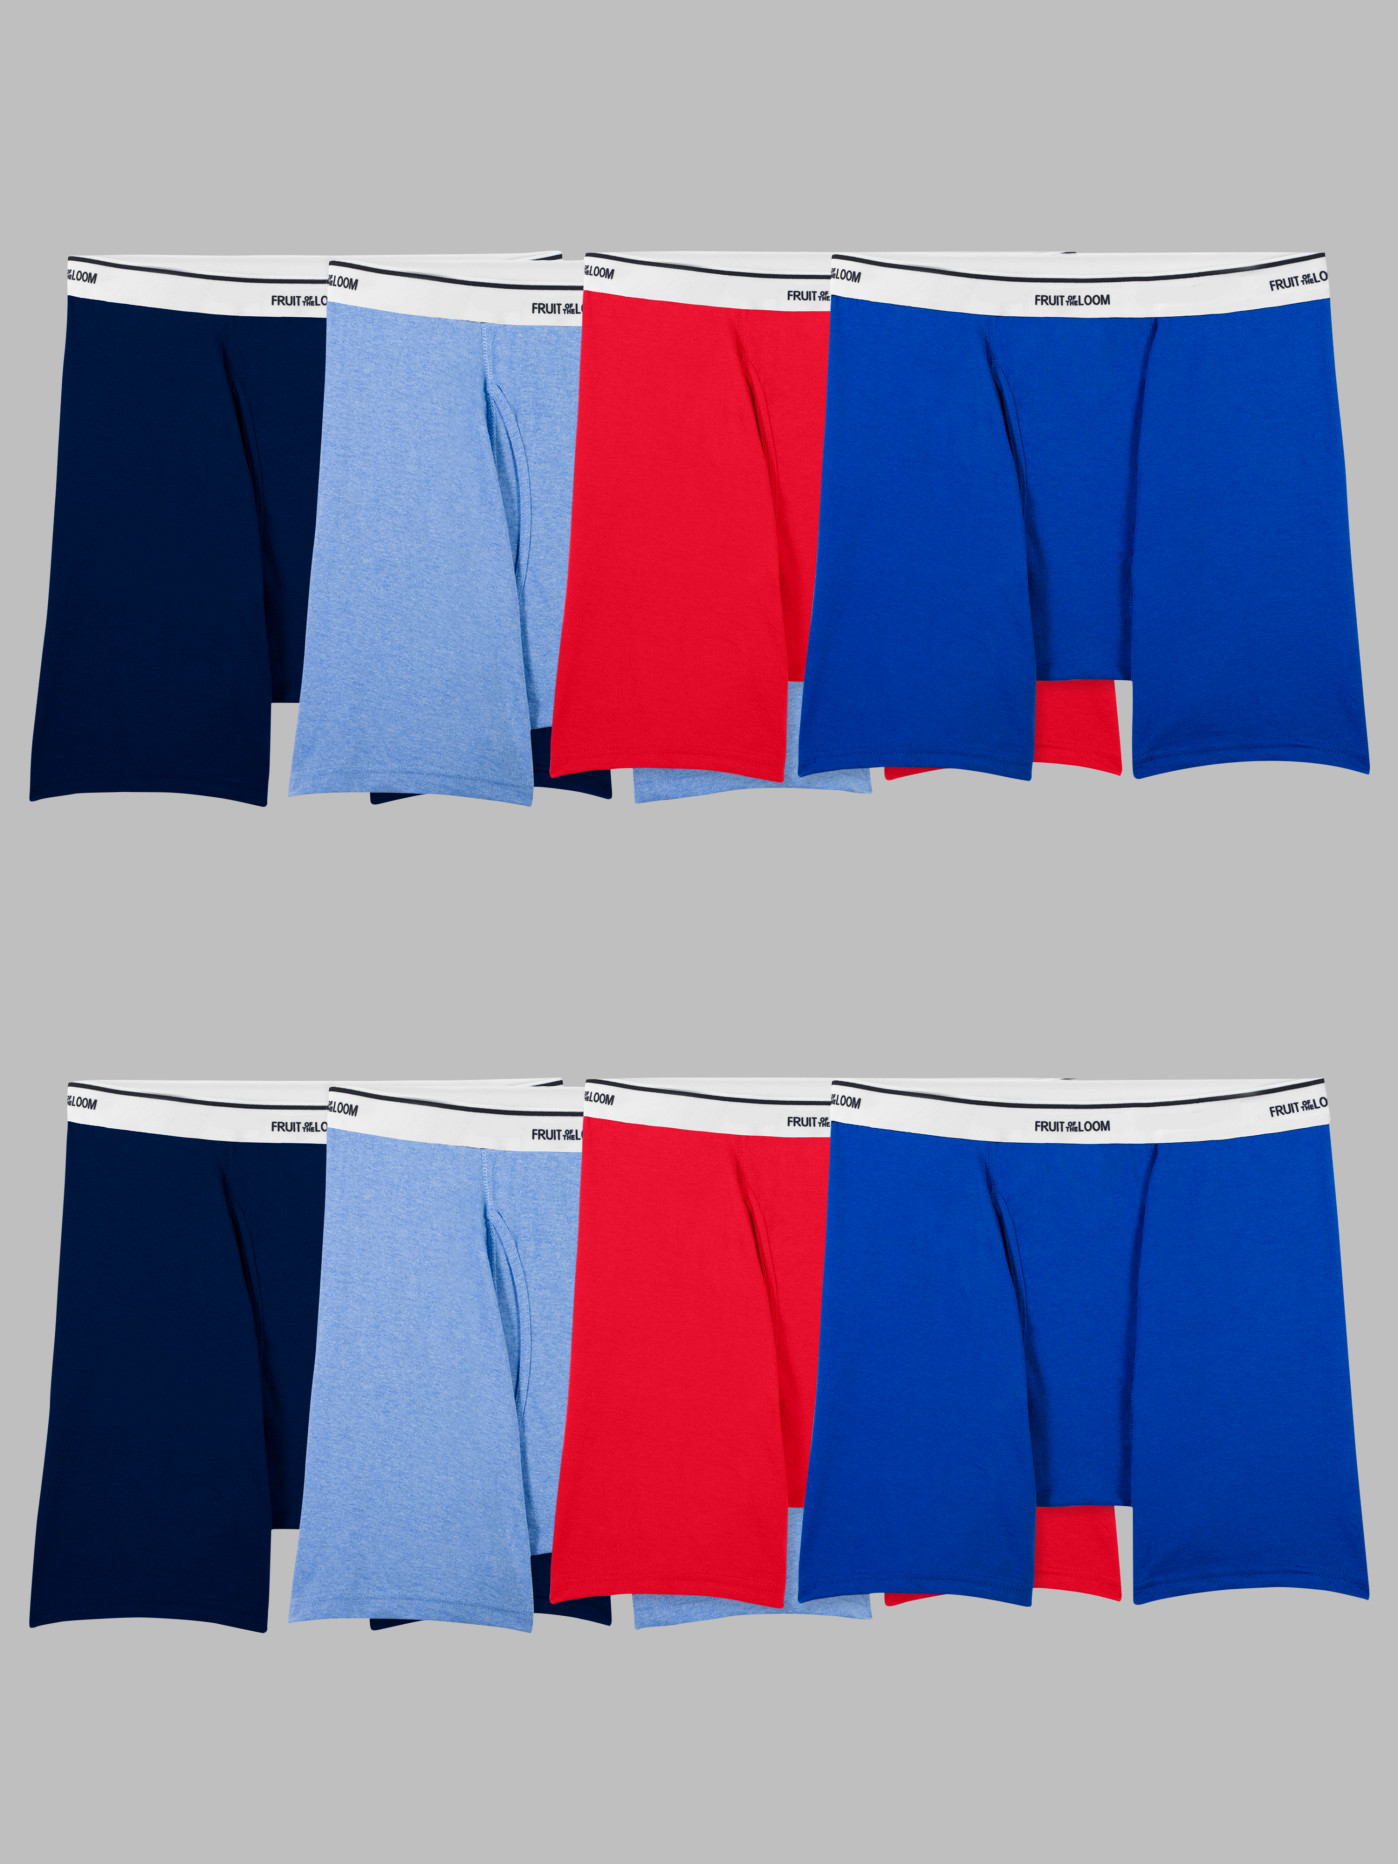 Pimfylm Cotton Underwear For Men Men's Jockstrap Underwear Breathable Mesh  Supporter Cotton Pouch Jock Briefs Sky Blue Large 